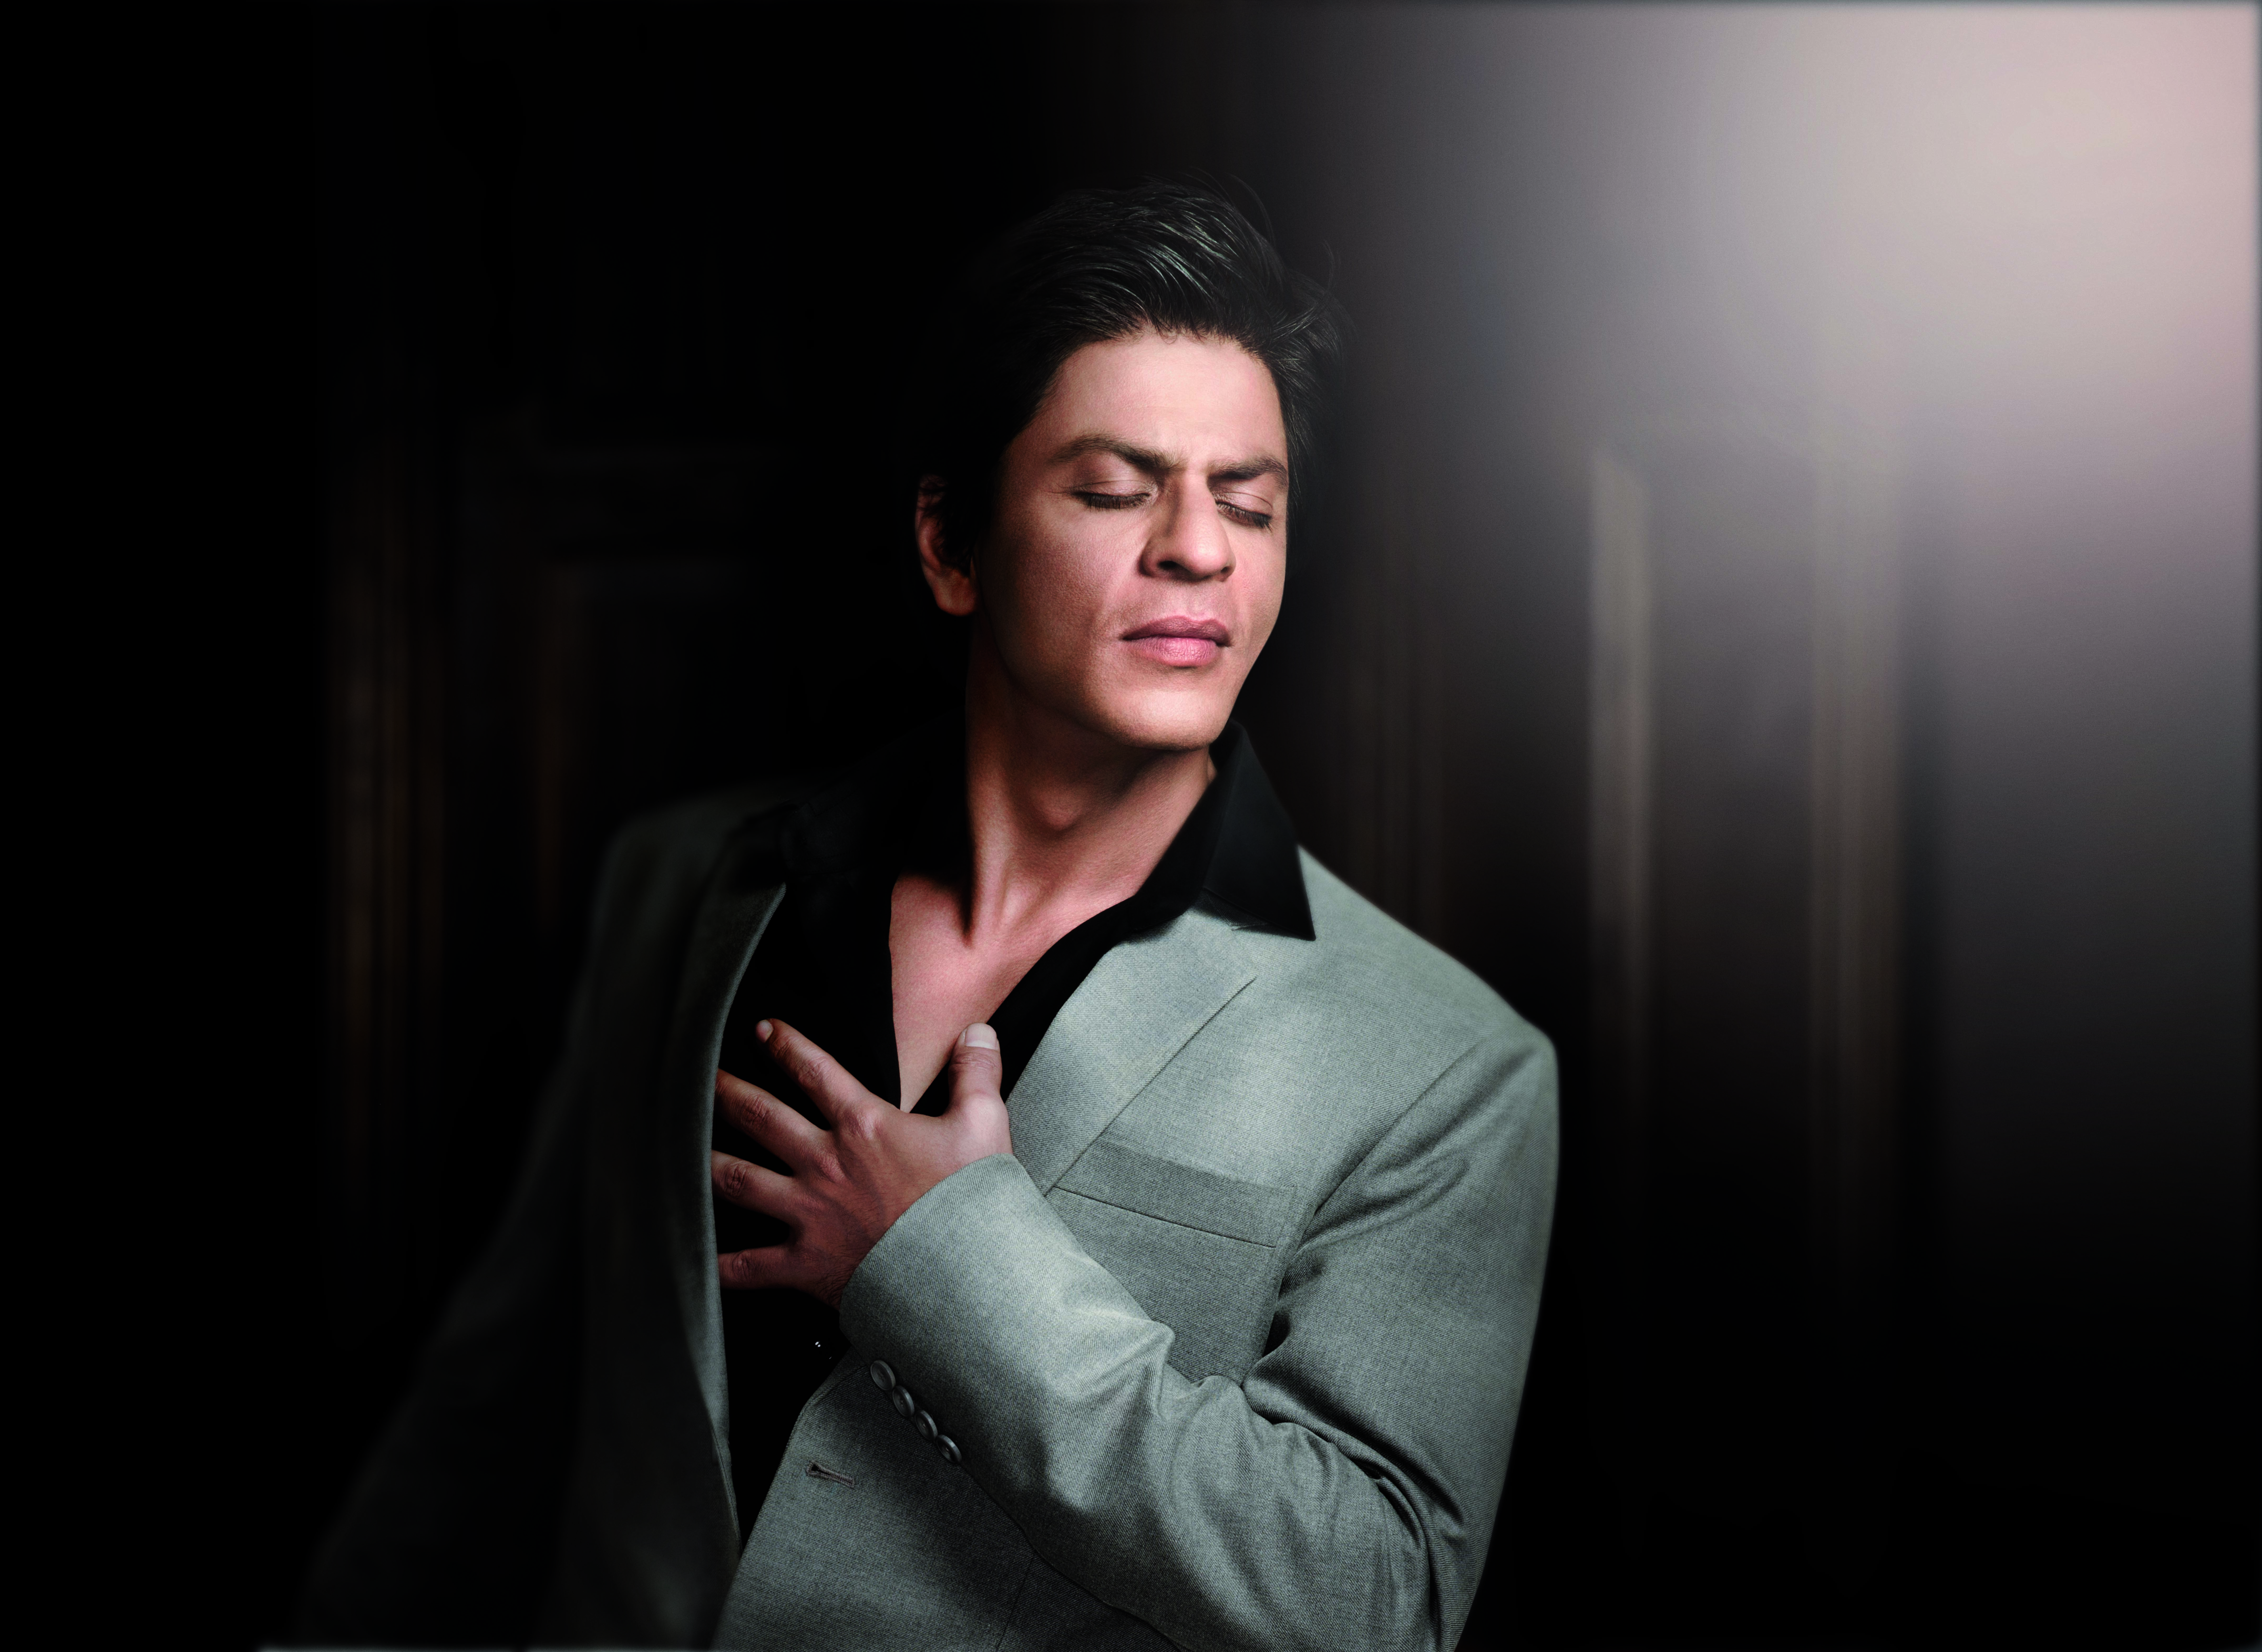 Team Shah Rukh Khan - This look of him 😍 | Facebook